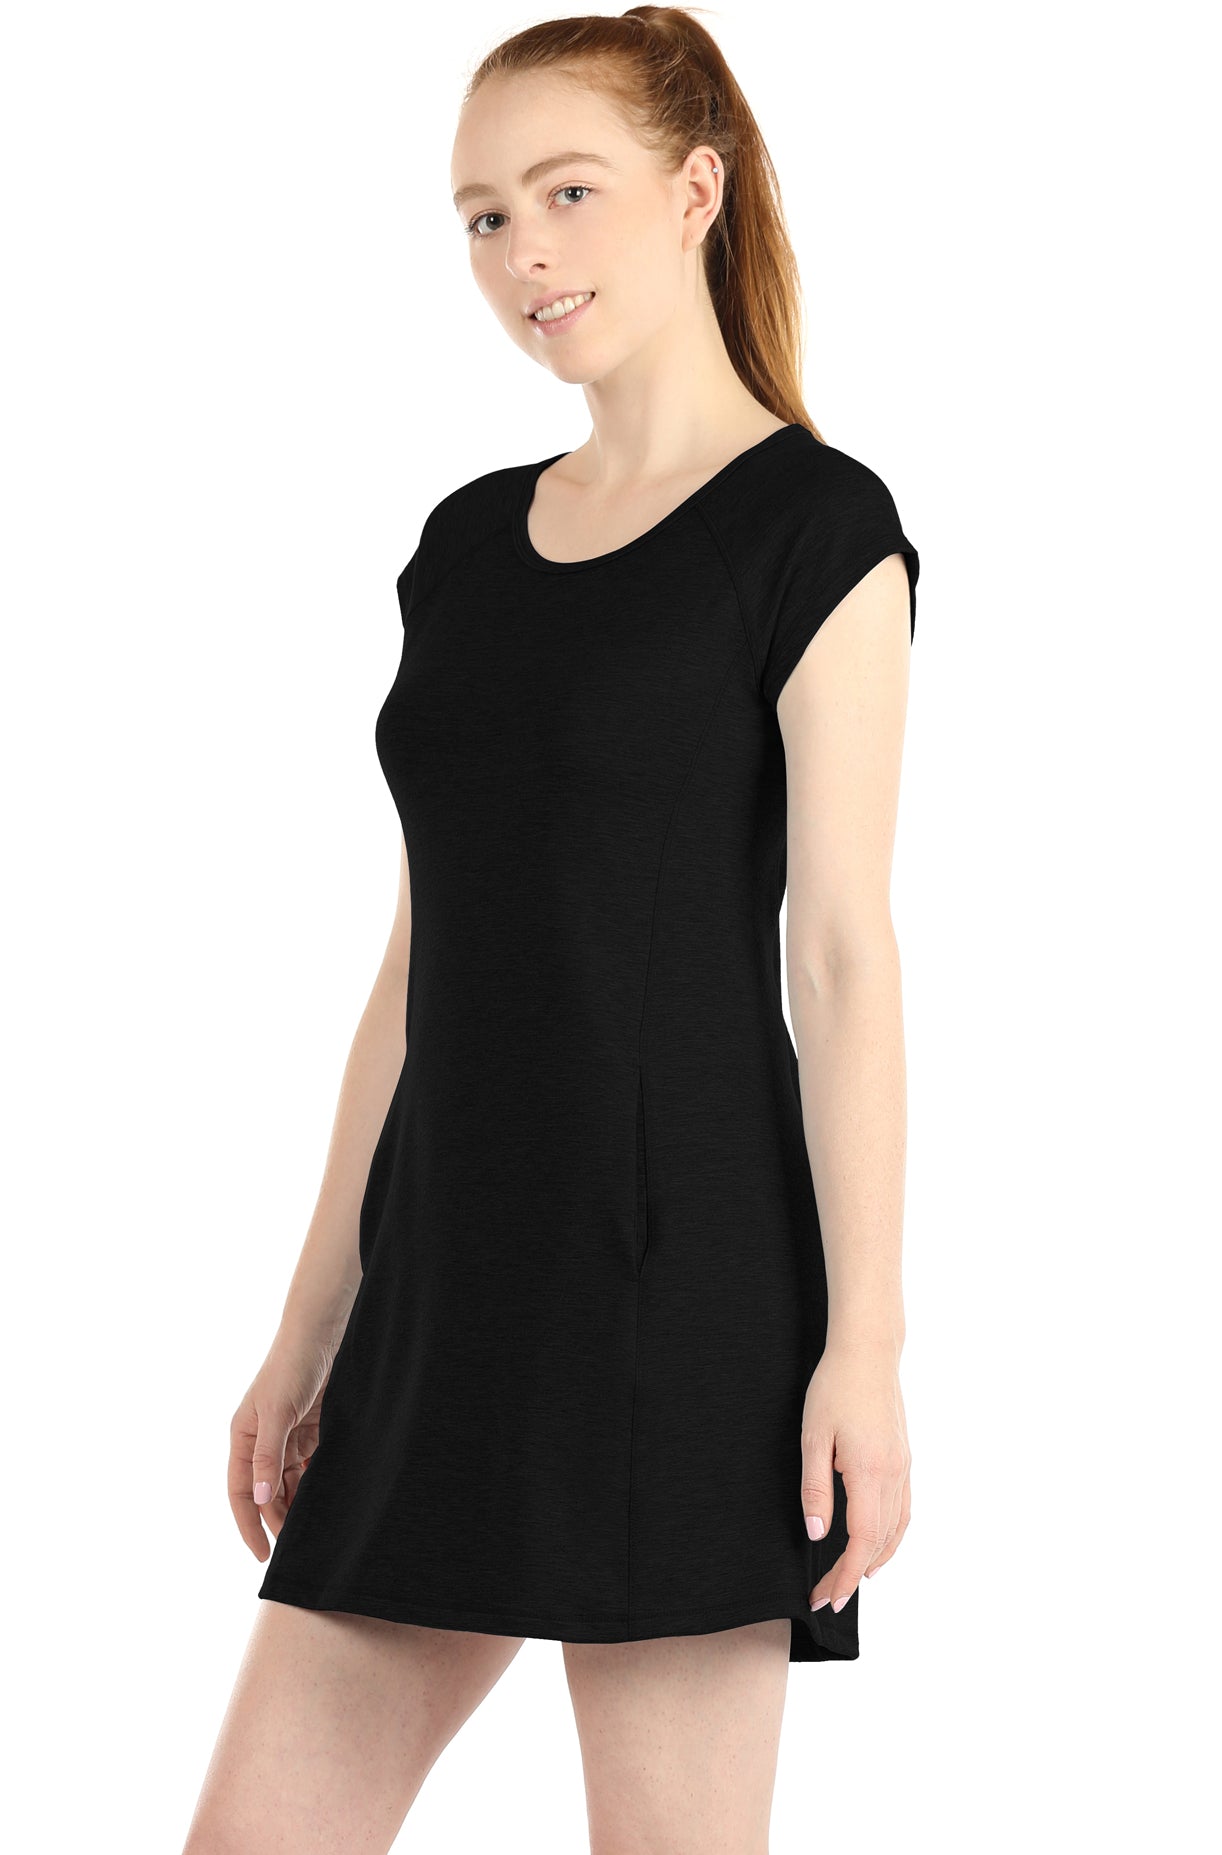 icyzone T-Shirt Dresses for Women - Short Sleeve Tunic Mini Dress